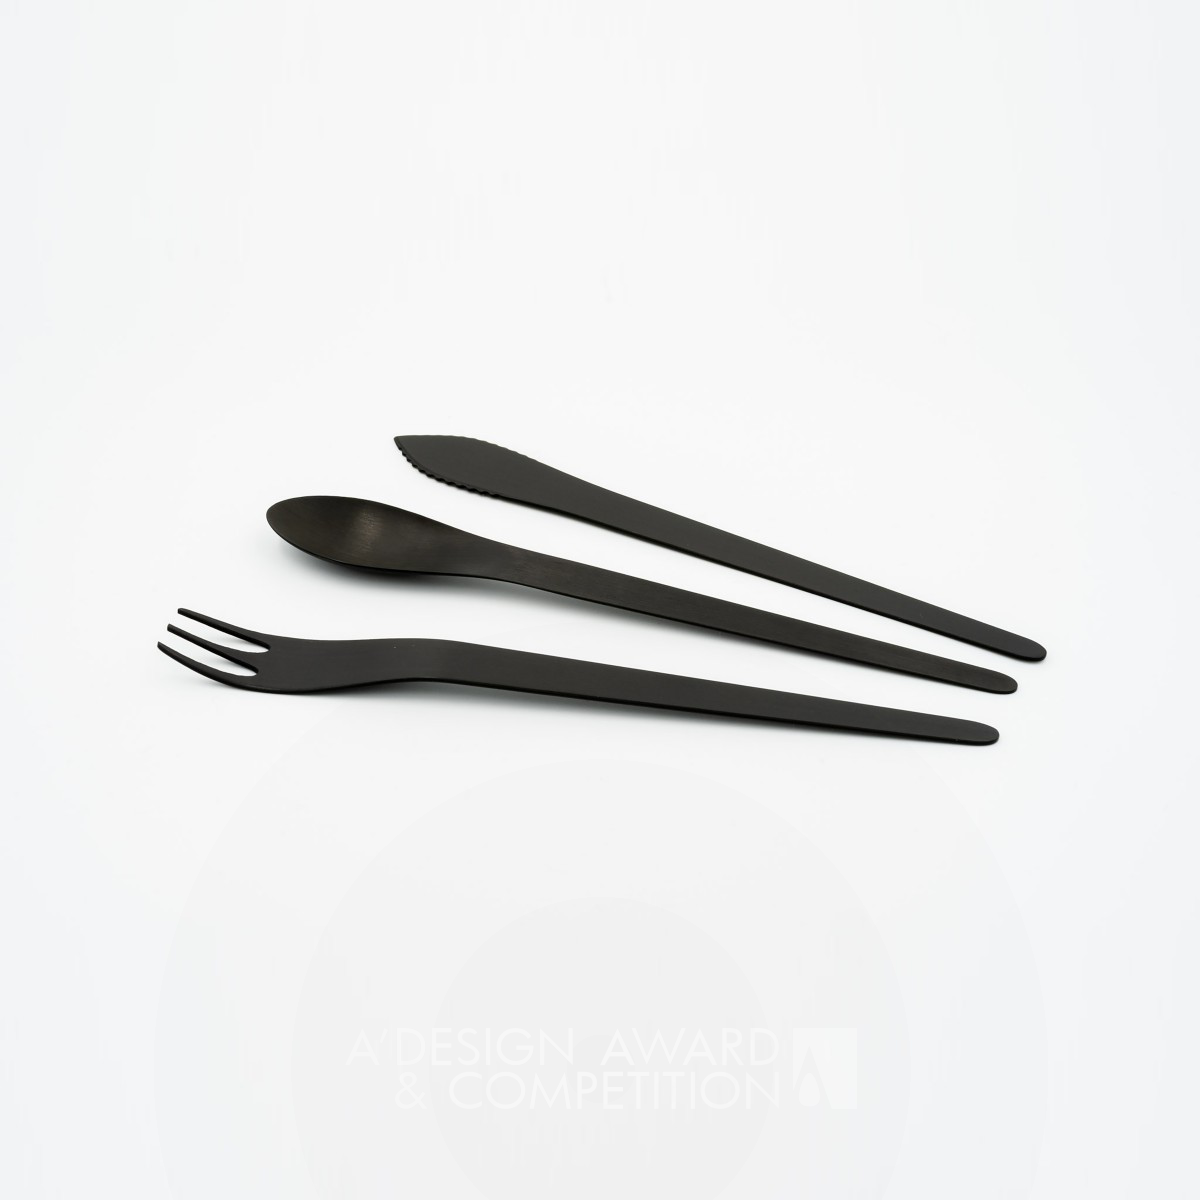 Carbon Fiber Cutlery Set: Six Grams